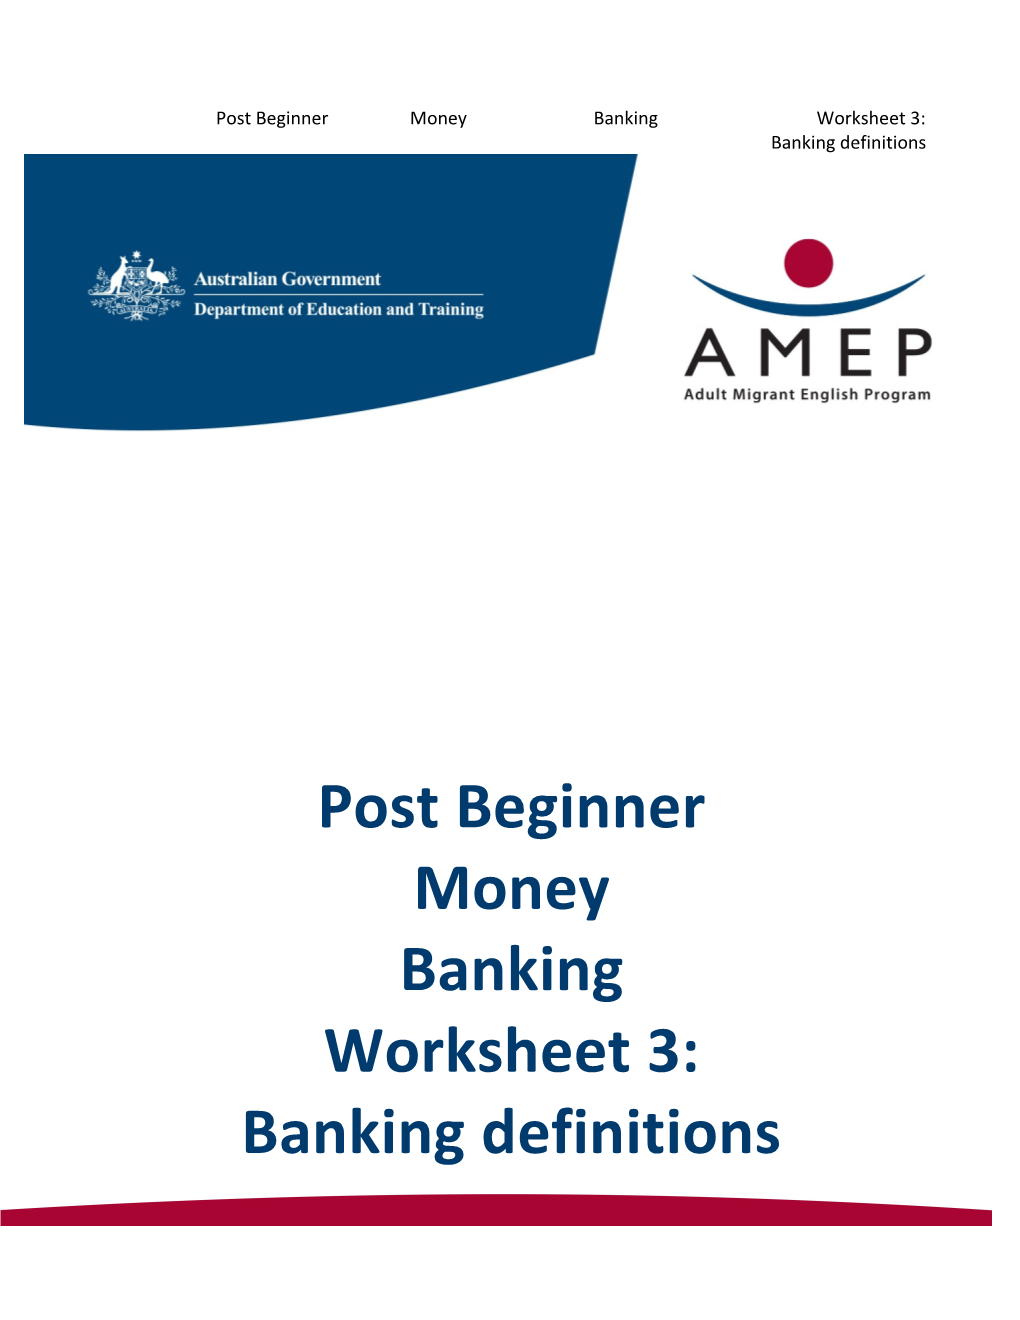 Post Beginner Money Banking Worksheet 3: Banking Definitions